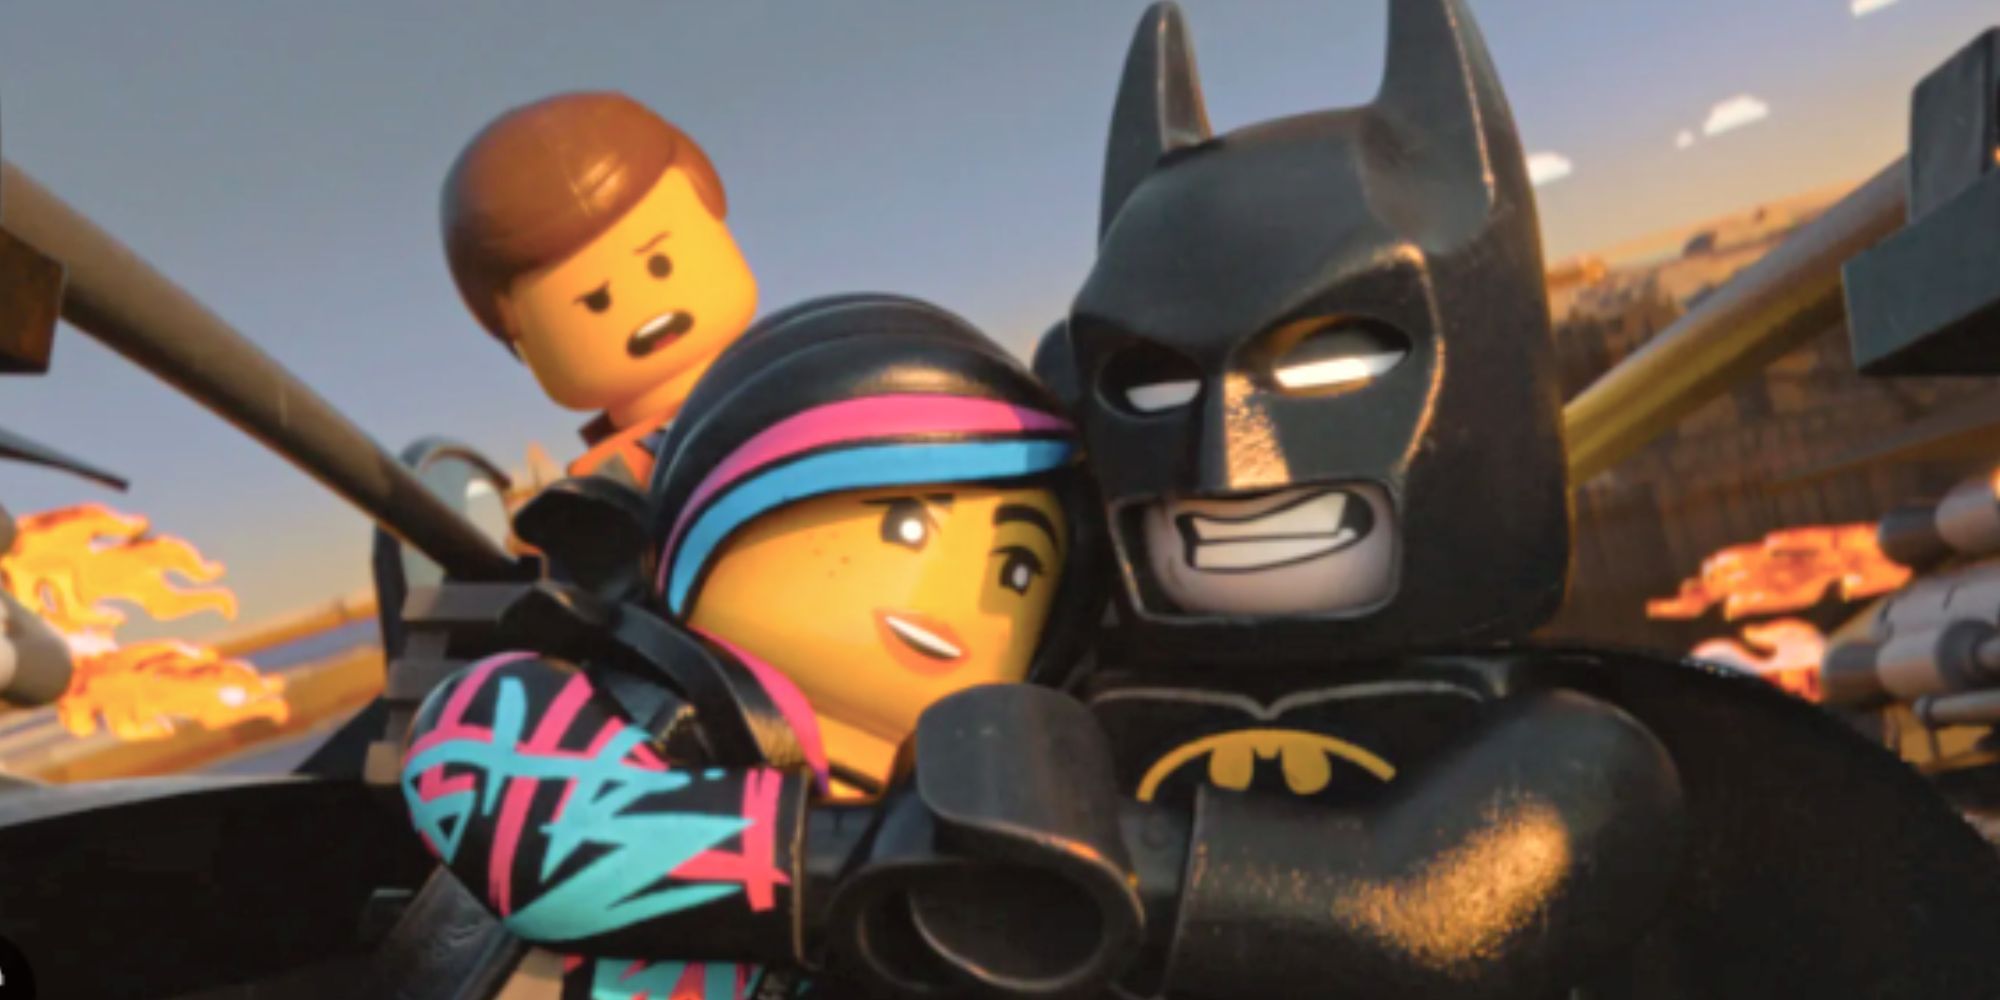 Elizabeth Banks as Wyldstyle/Lucy, Will Arnett as Batman and Chris Pratt as Emmet in The LEGO Movie